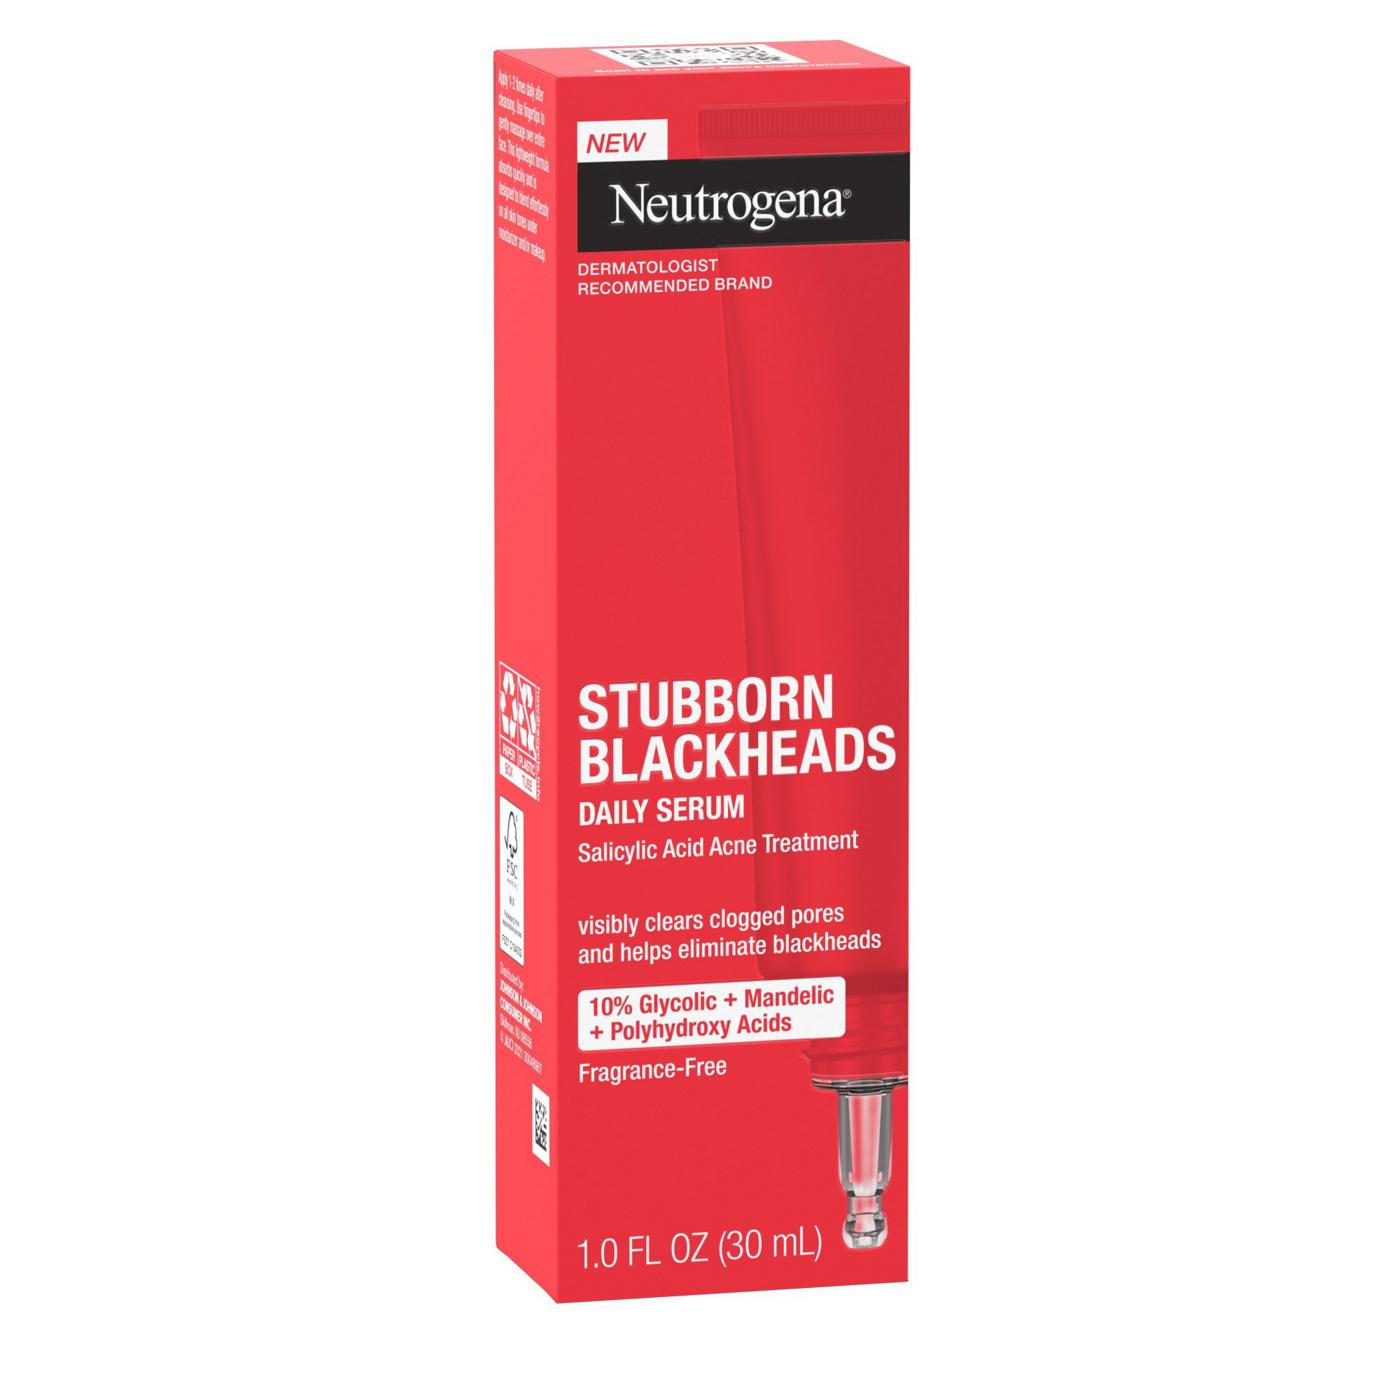 Neutrogena Stubborn Blackheads Daily Acne Facial Serum; image 1 of 6